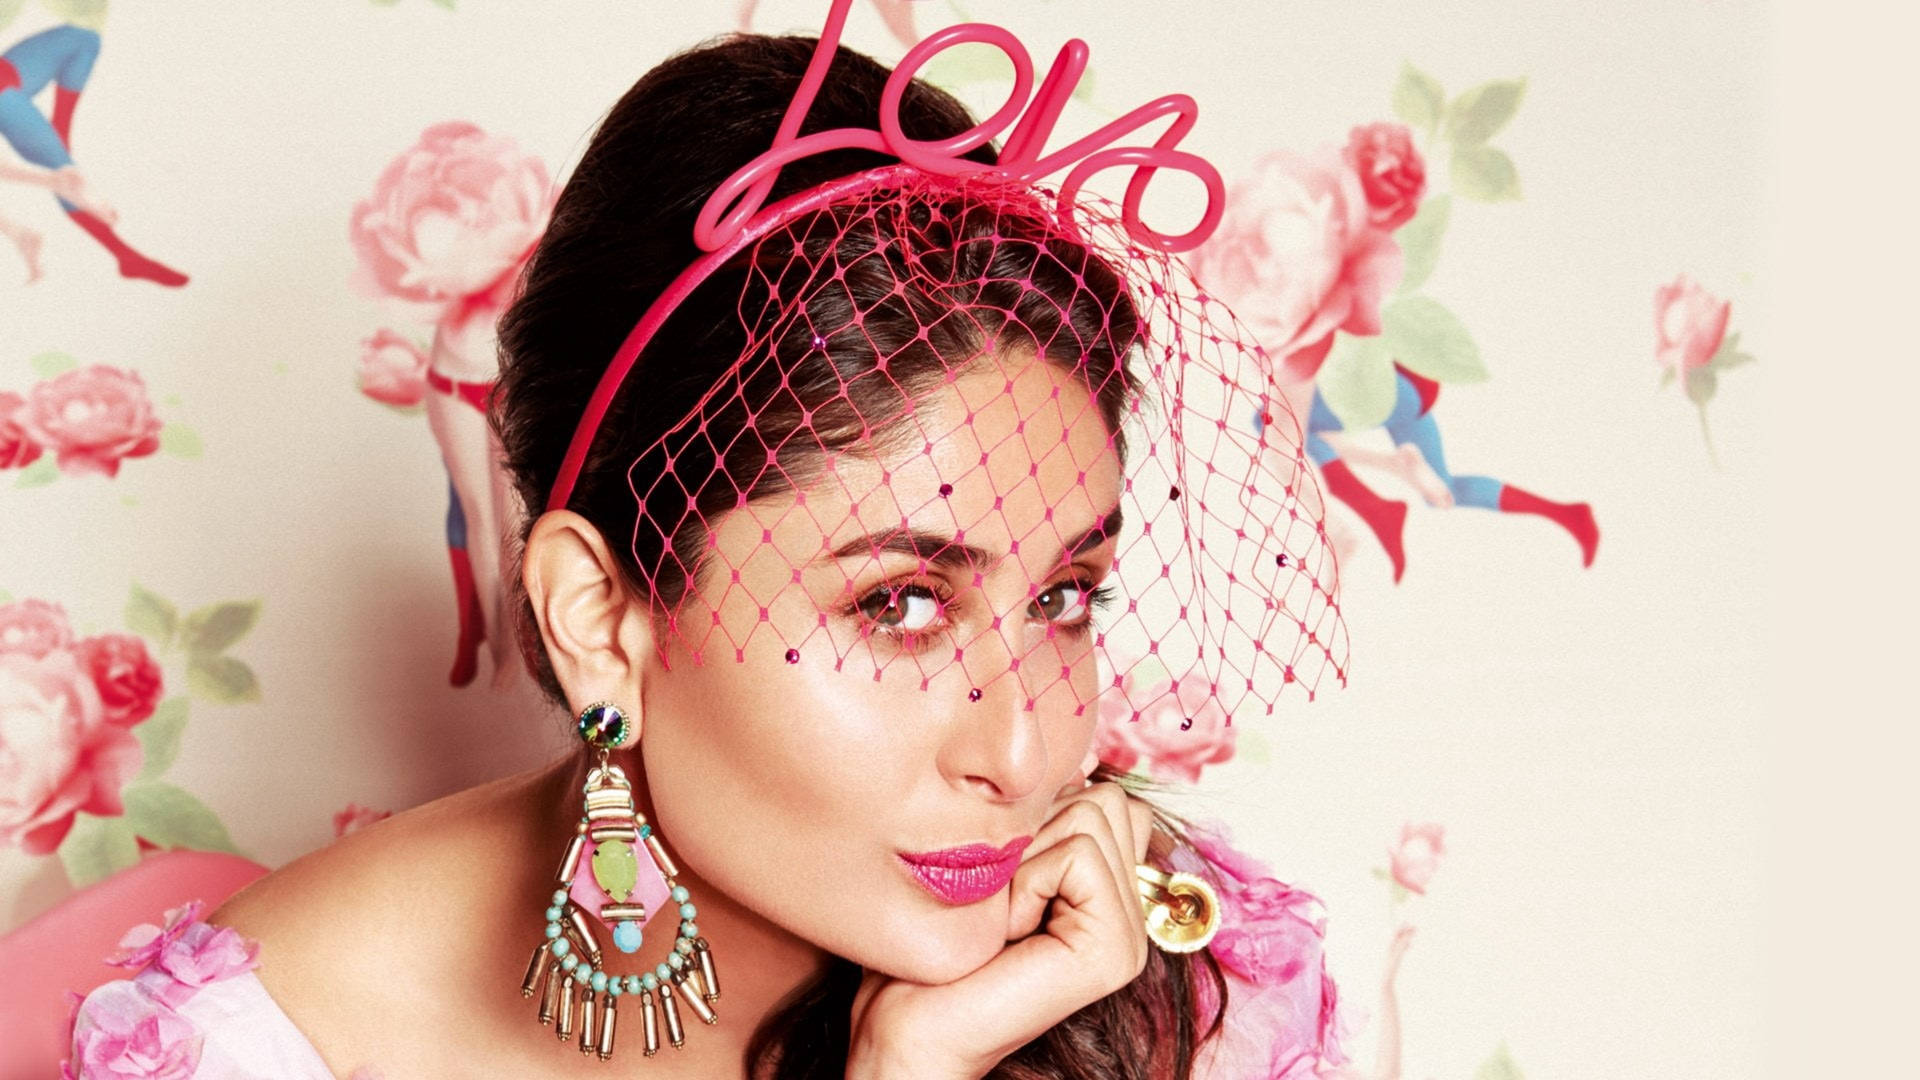 Girly Kareena Kapoor Vogue Photoshoot Wallpaper